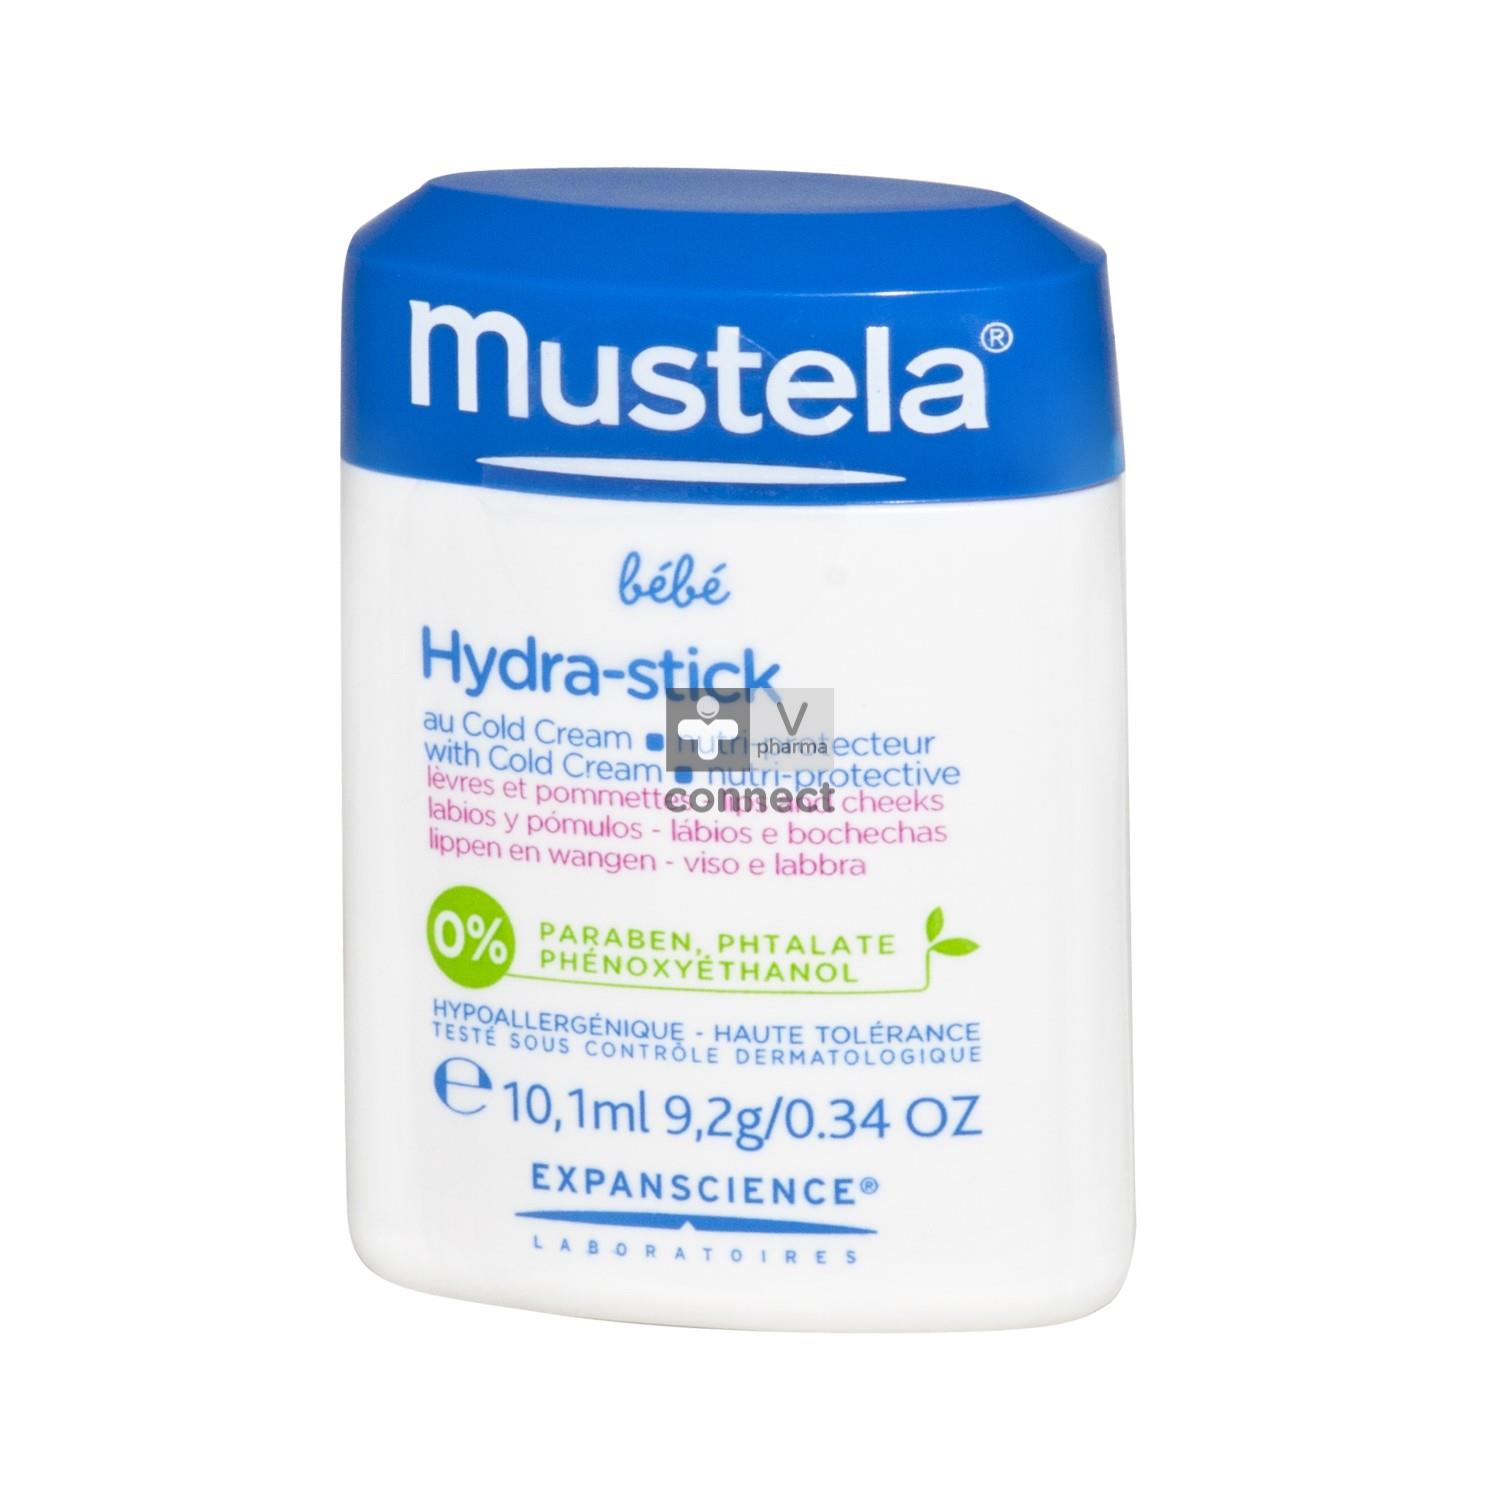 mustela hydra stick cold cream